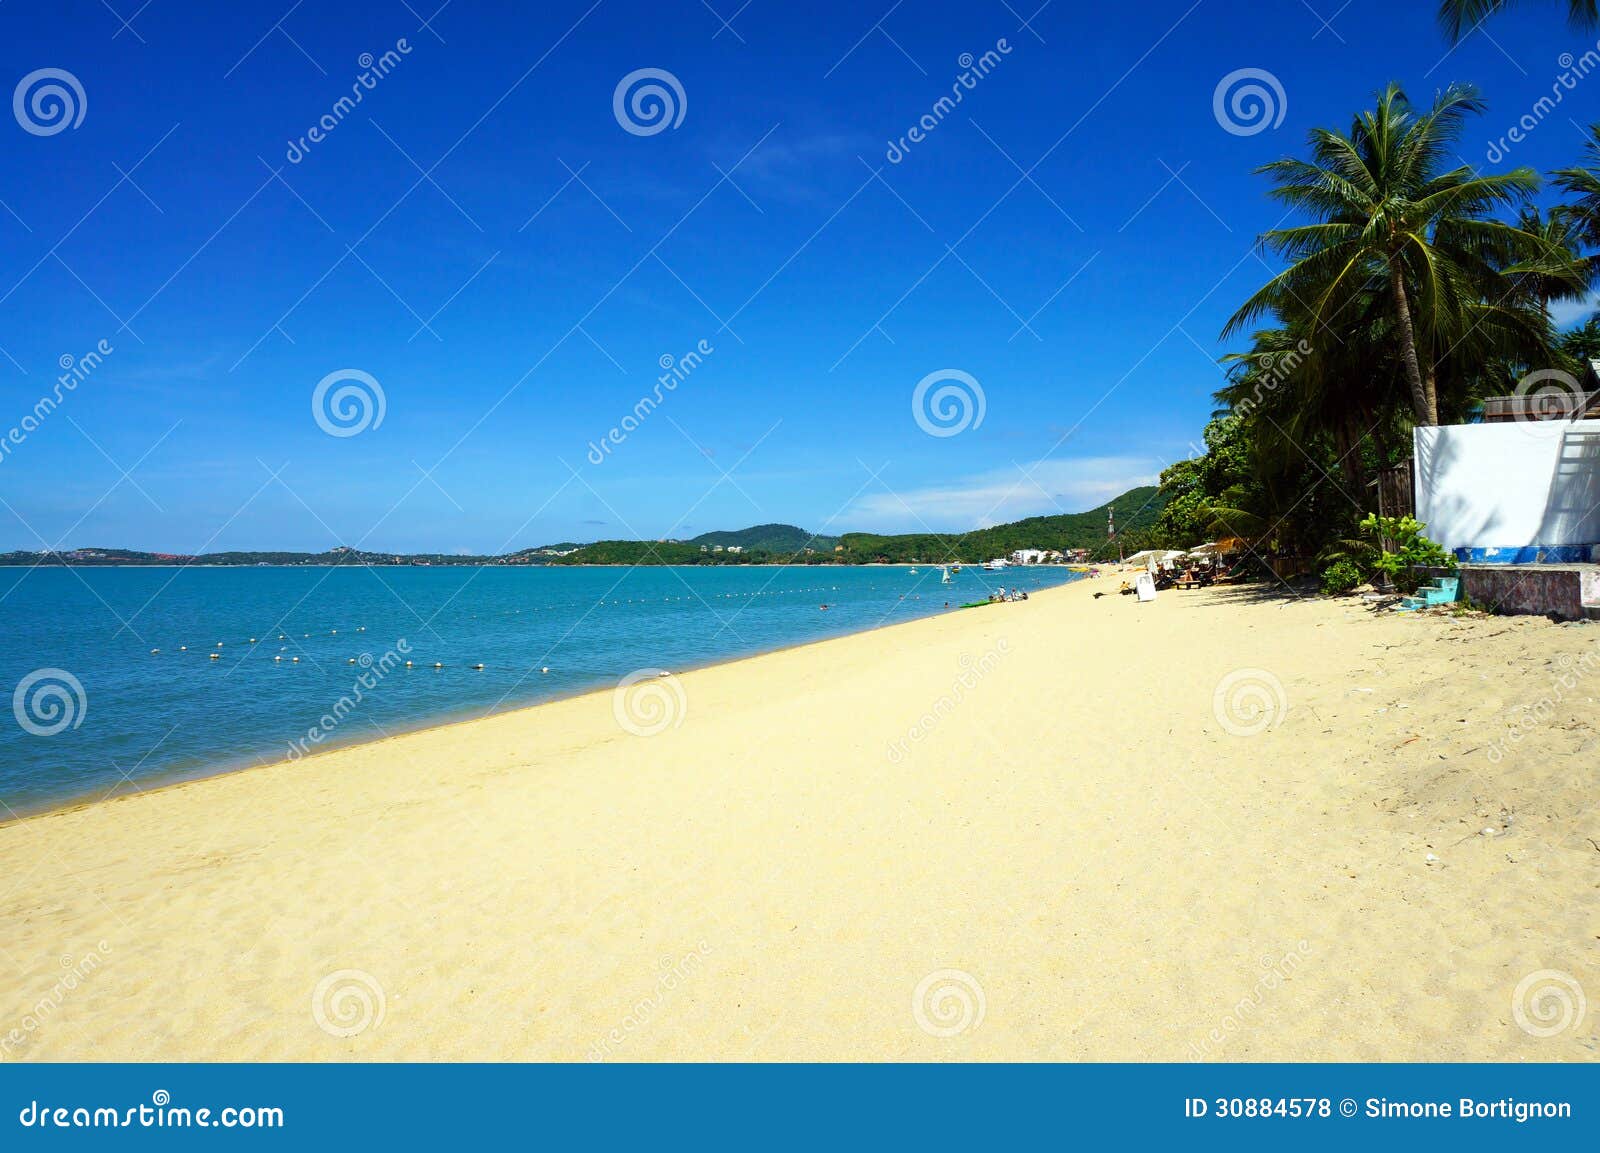 the bophut beach with white sand and blue sky